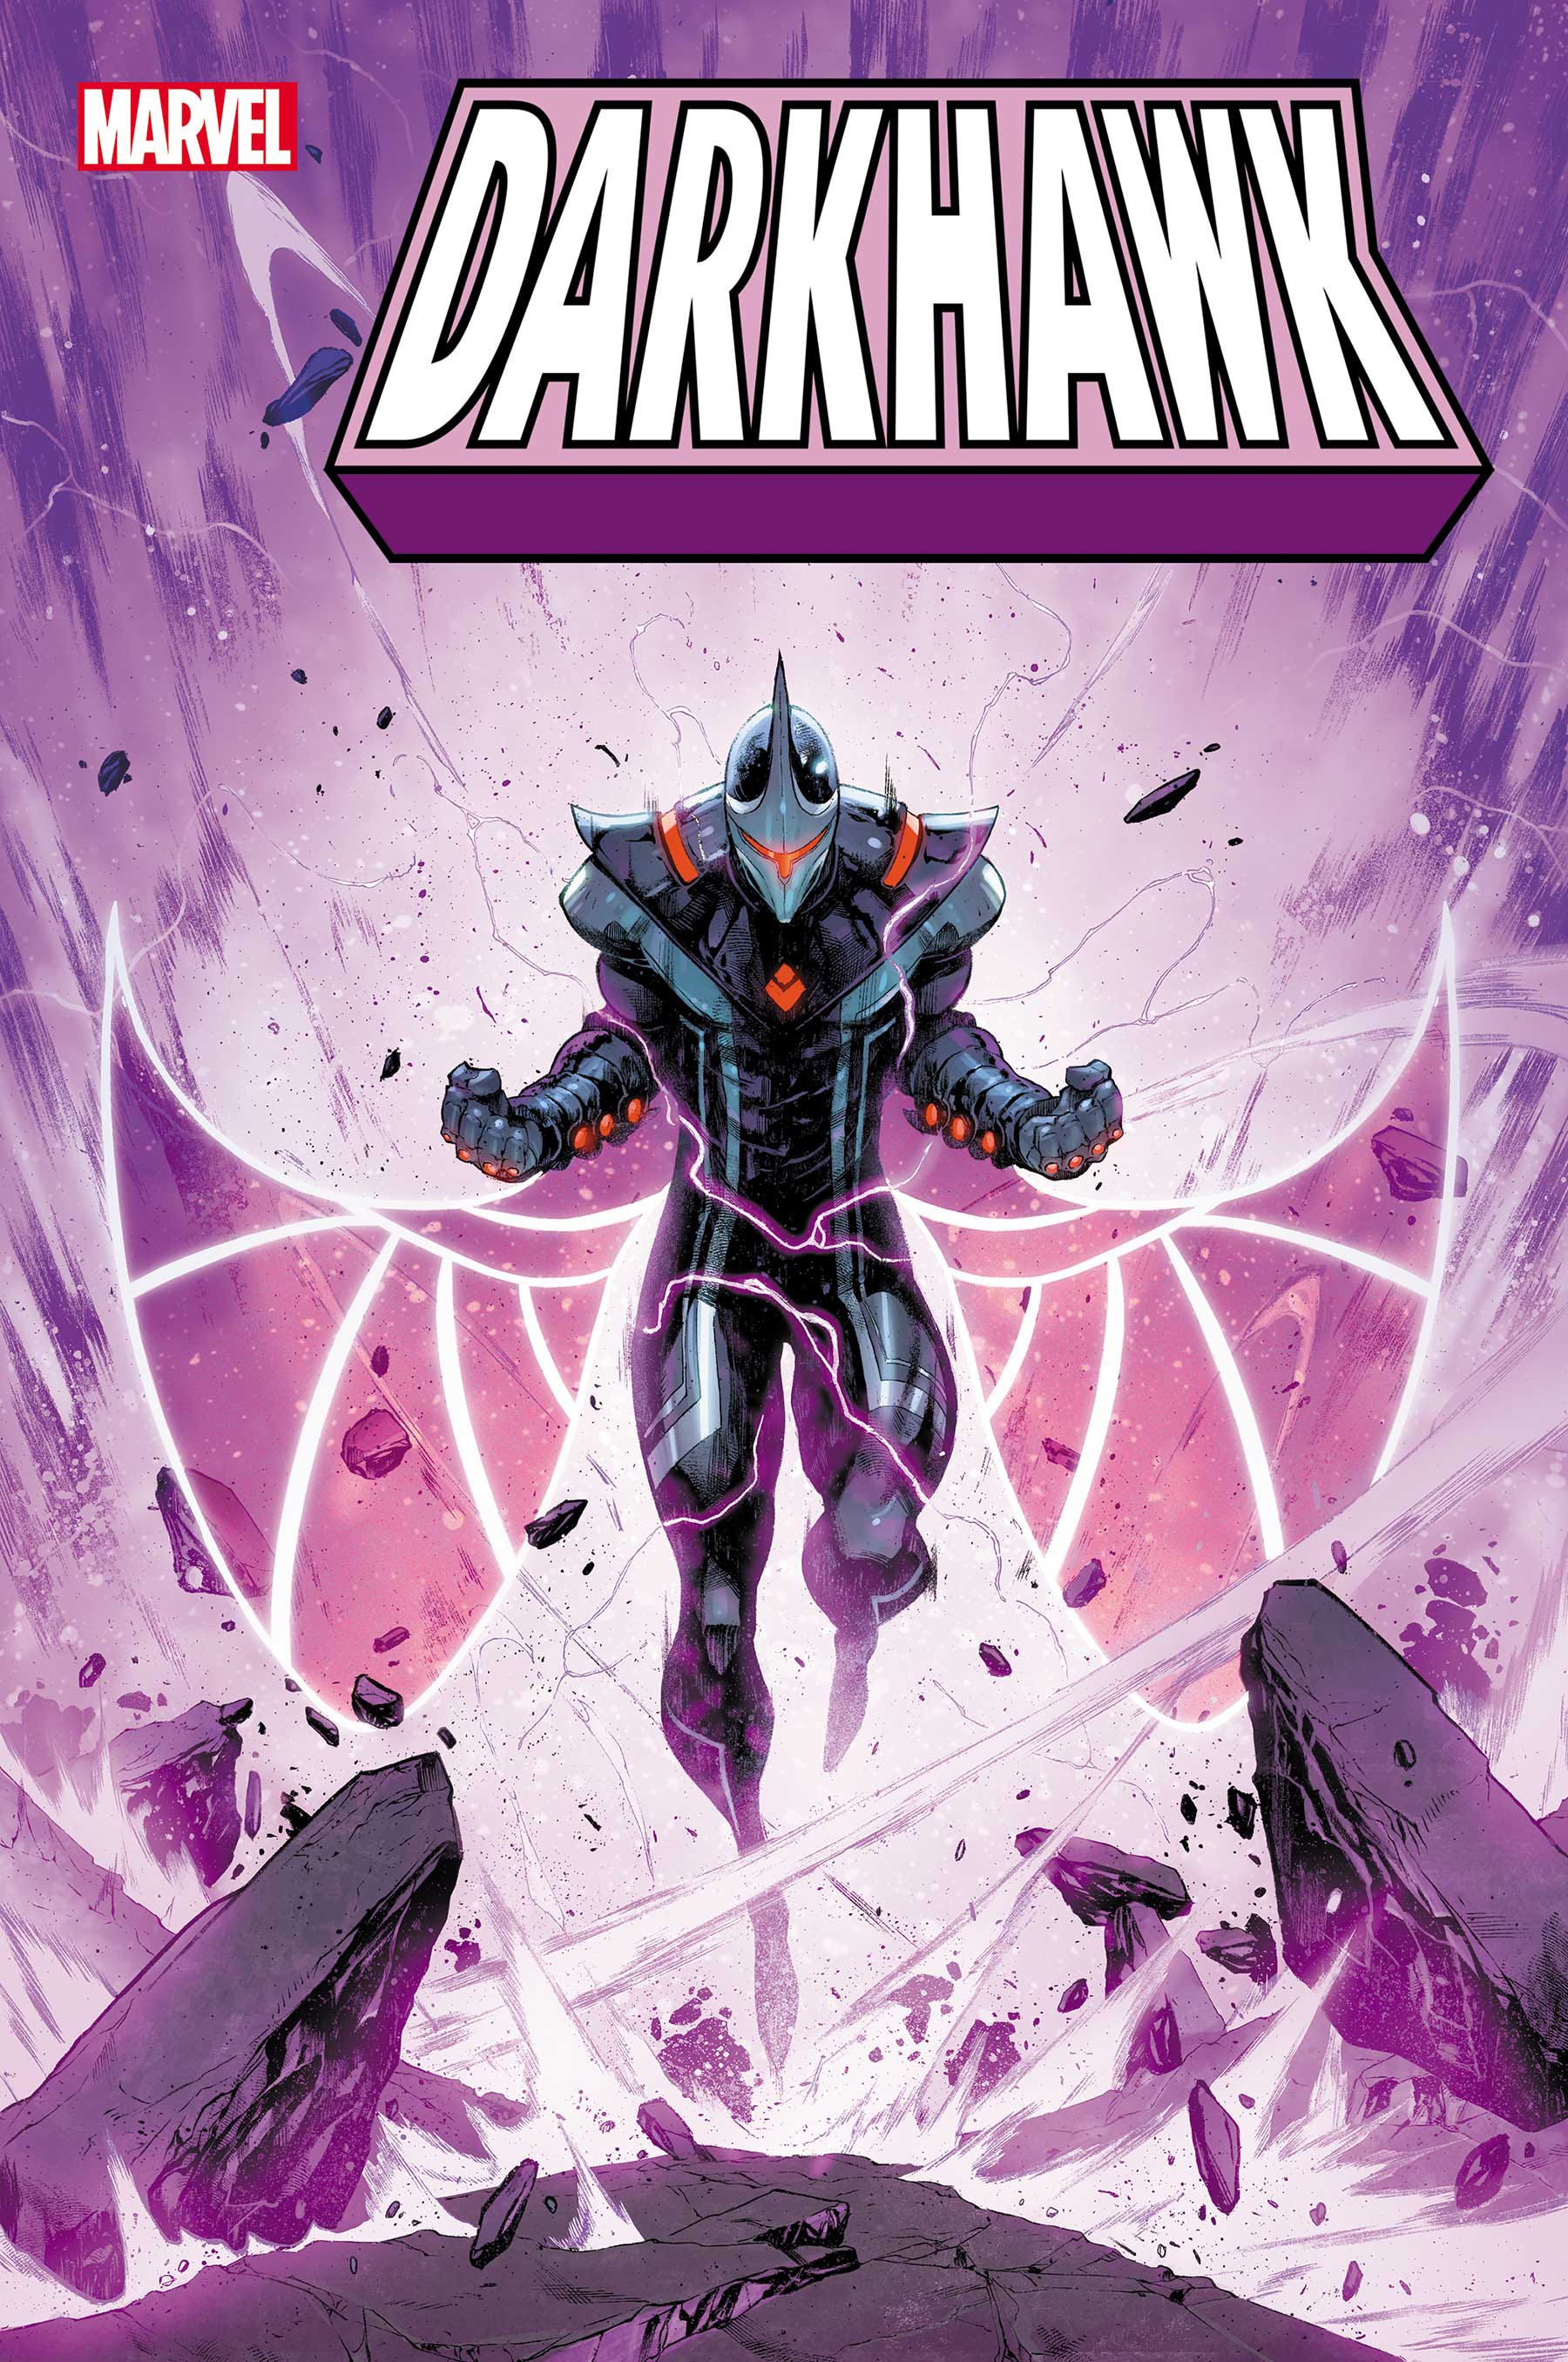 Darkhawk #1 (of 5)